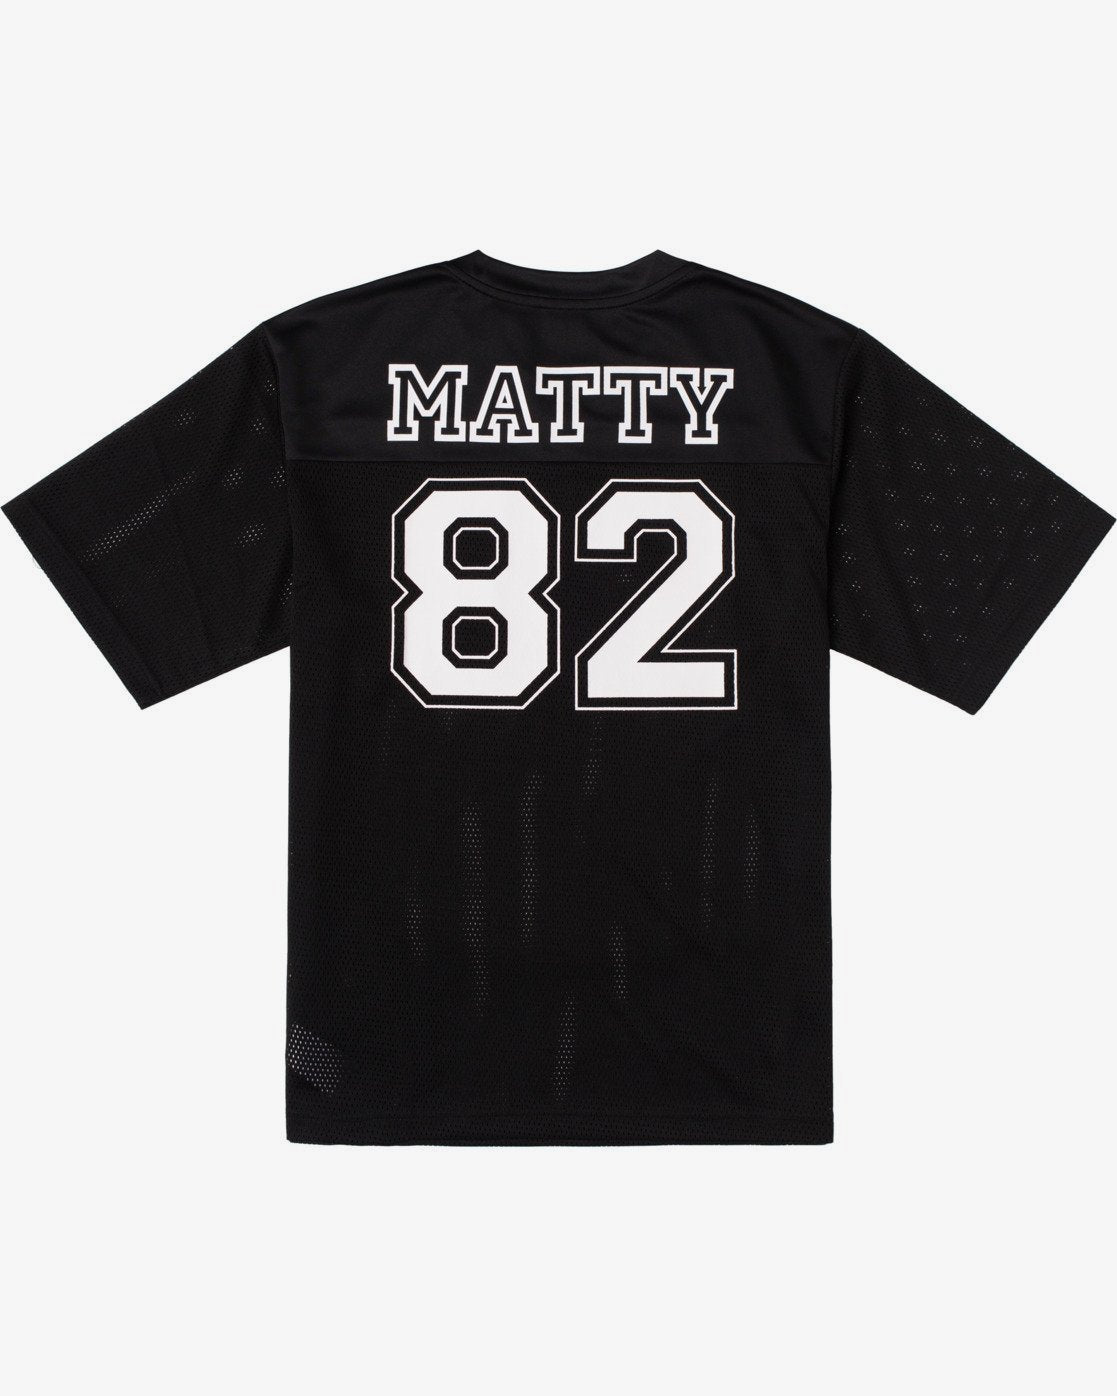 RVCA Matty Practice Jersey for Men Black Front Back Matty 82